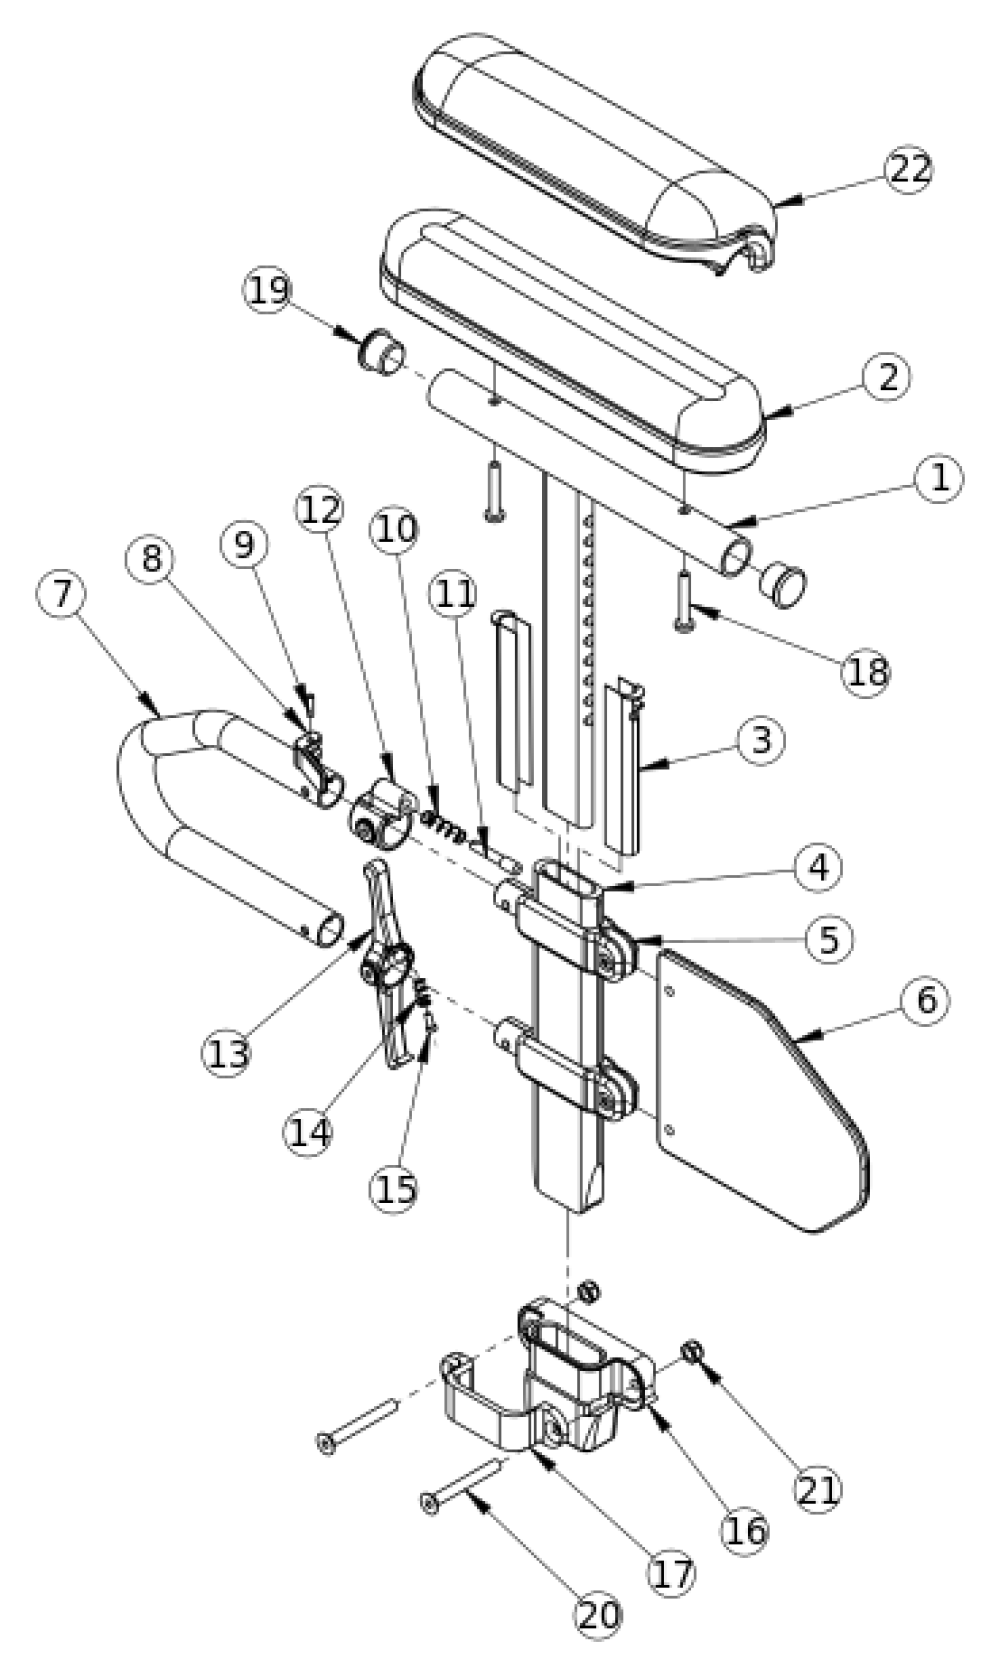 (discontinued) Rigid Height Adjustable T-arm parts diagram